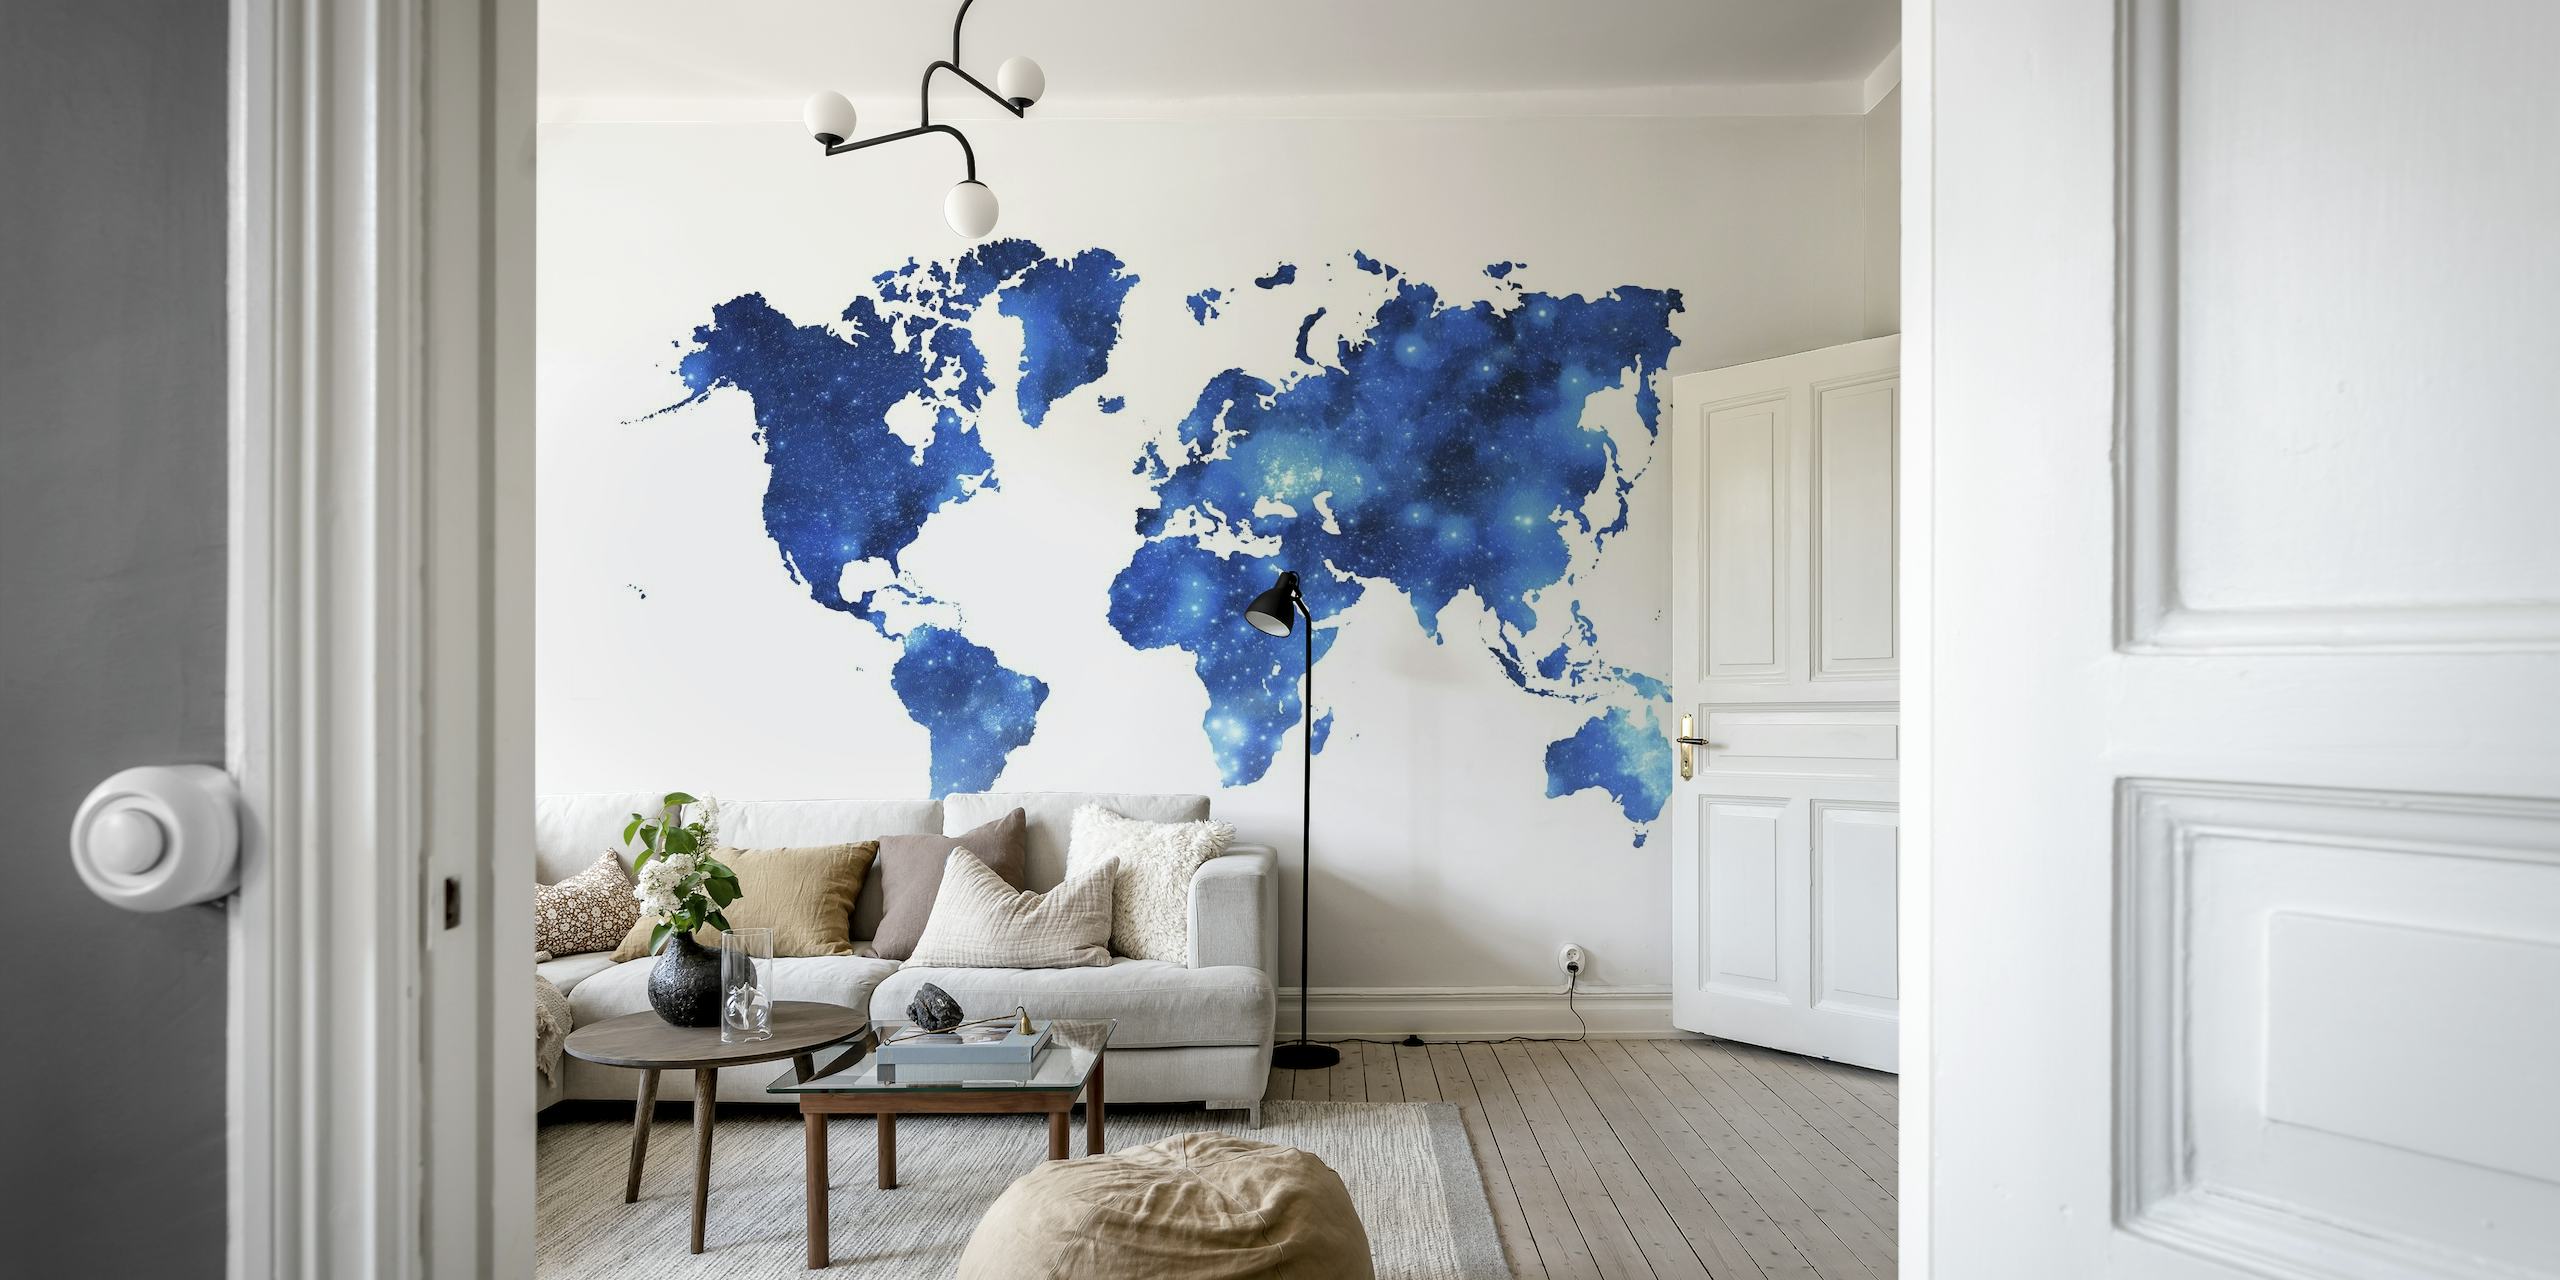 Dunkelblaue Fototapete im Aquarell-Stil mit Weltkarte